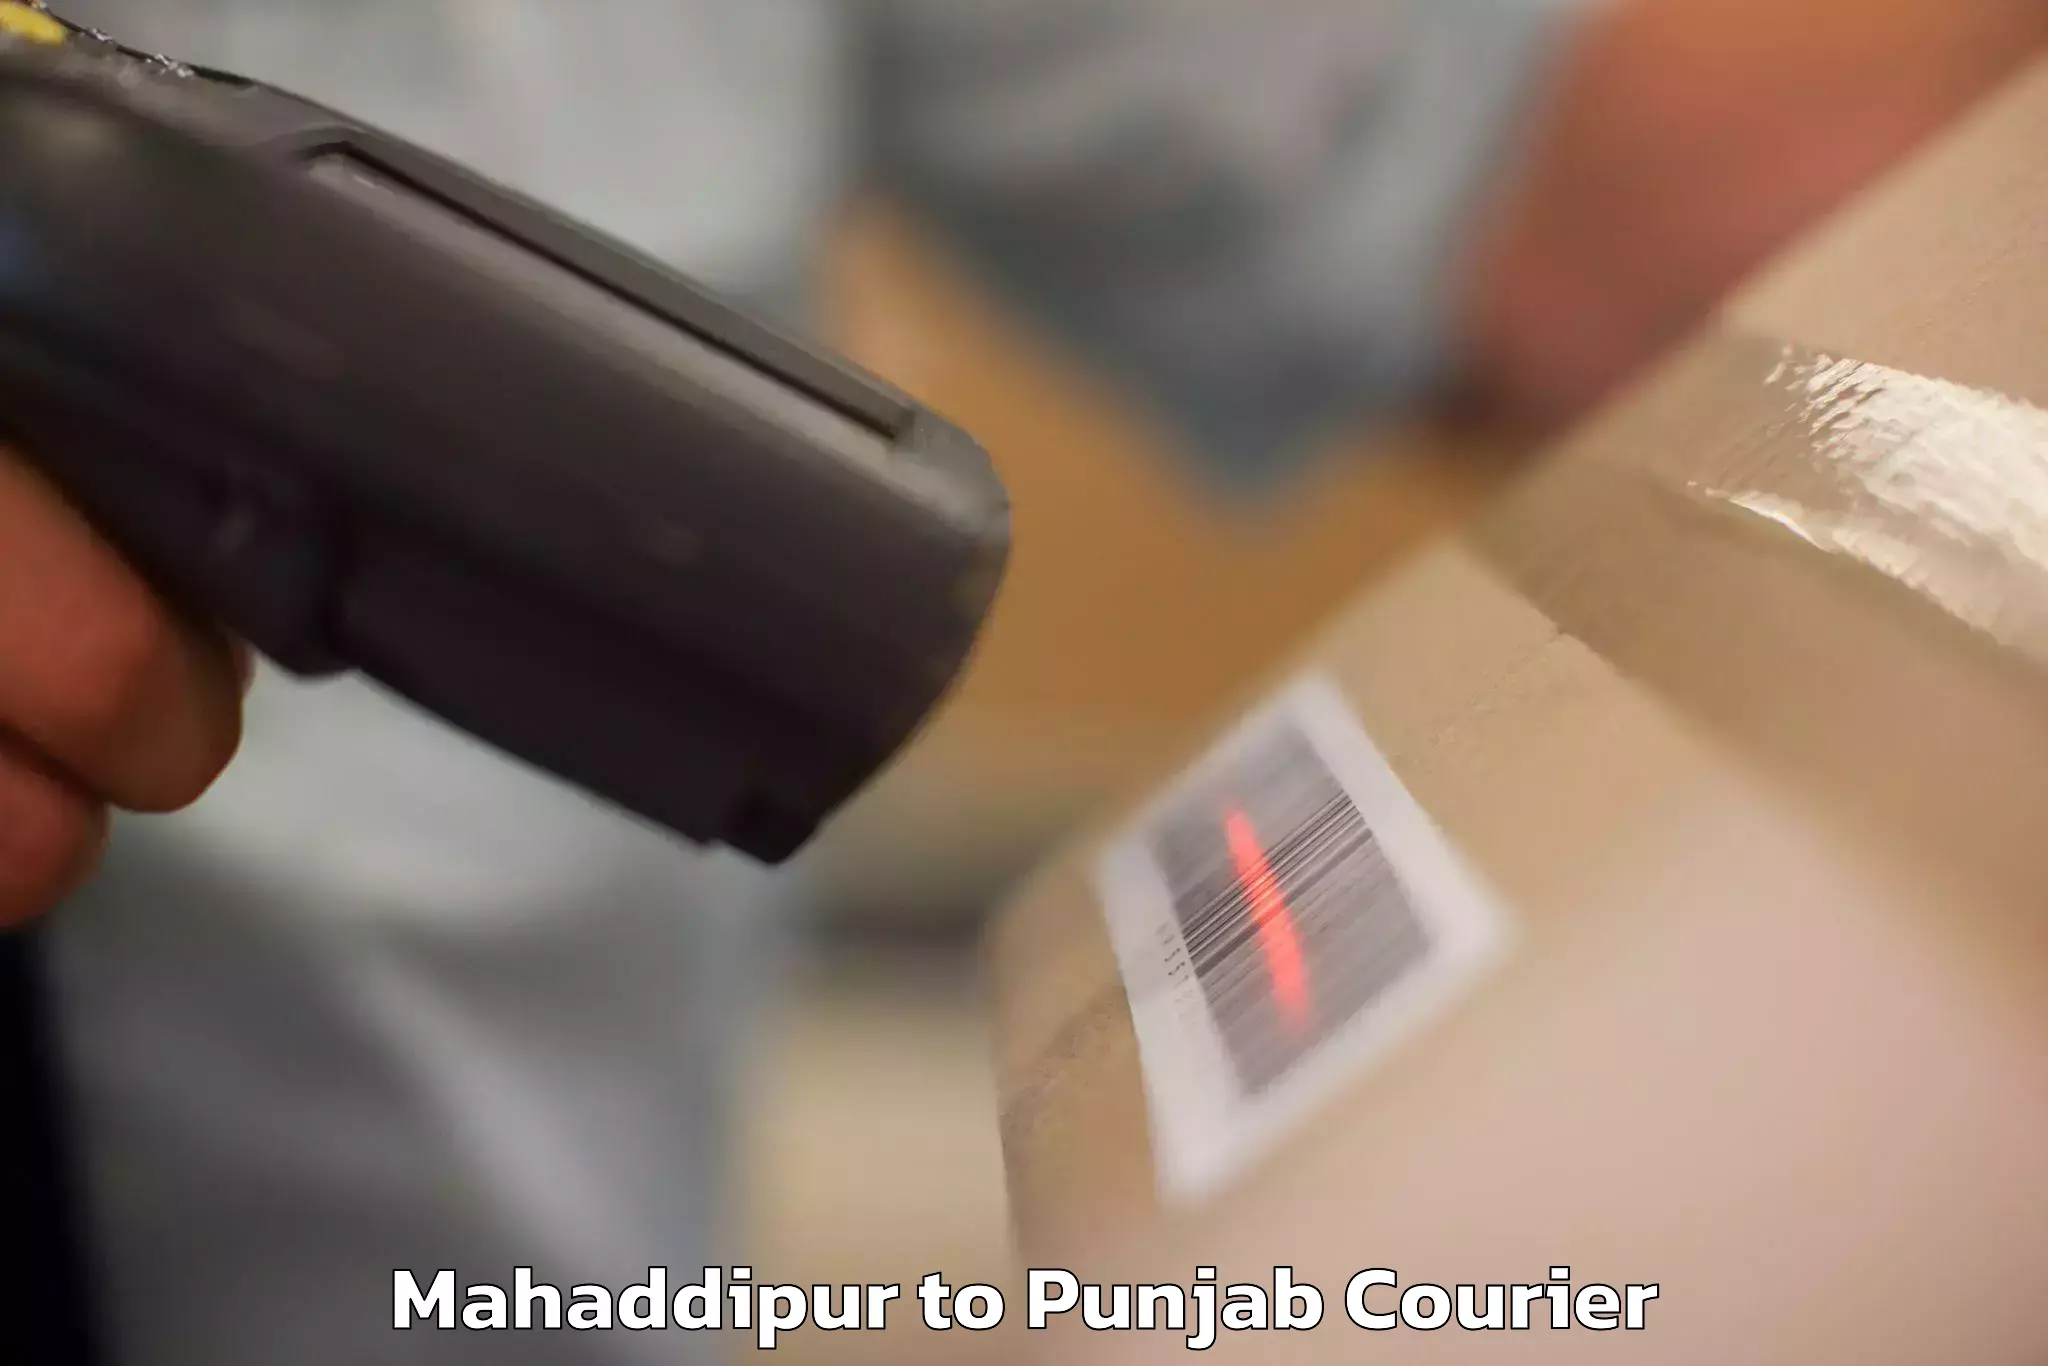 Baggage shipping experts Mahaddipur to Punjab